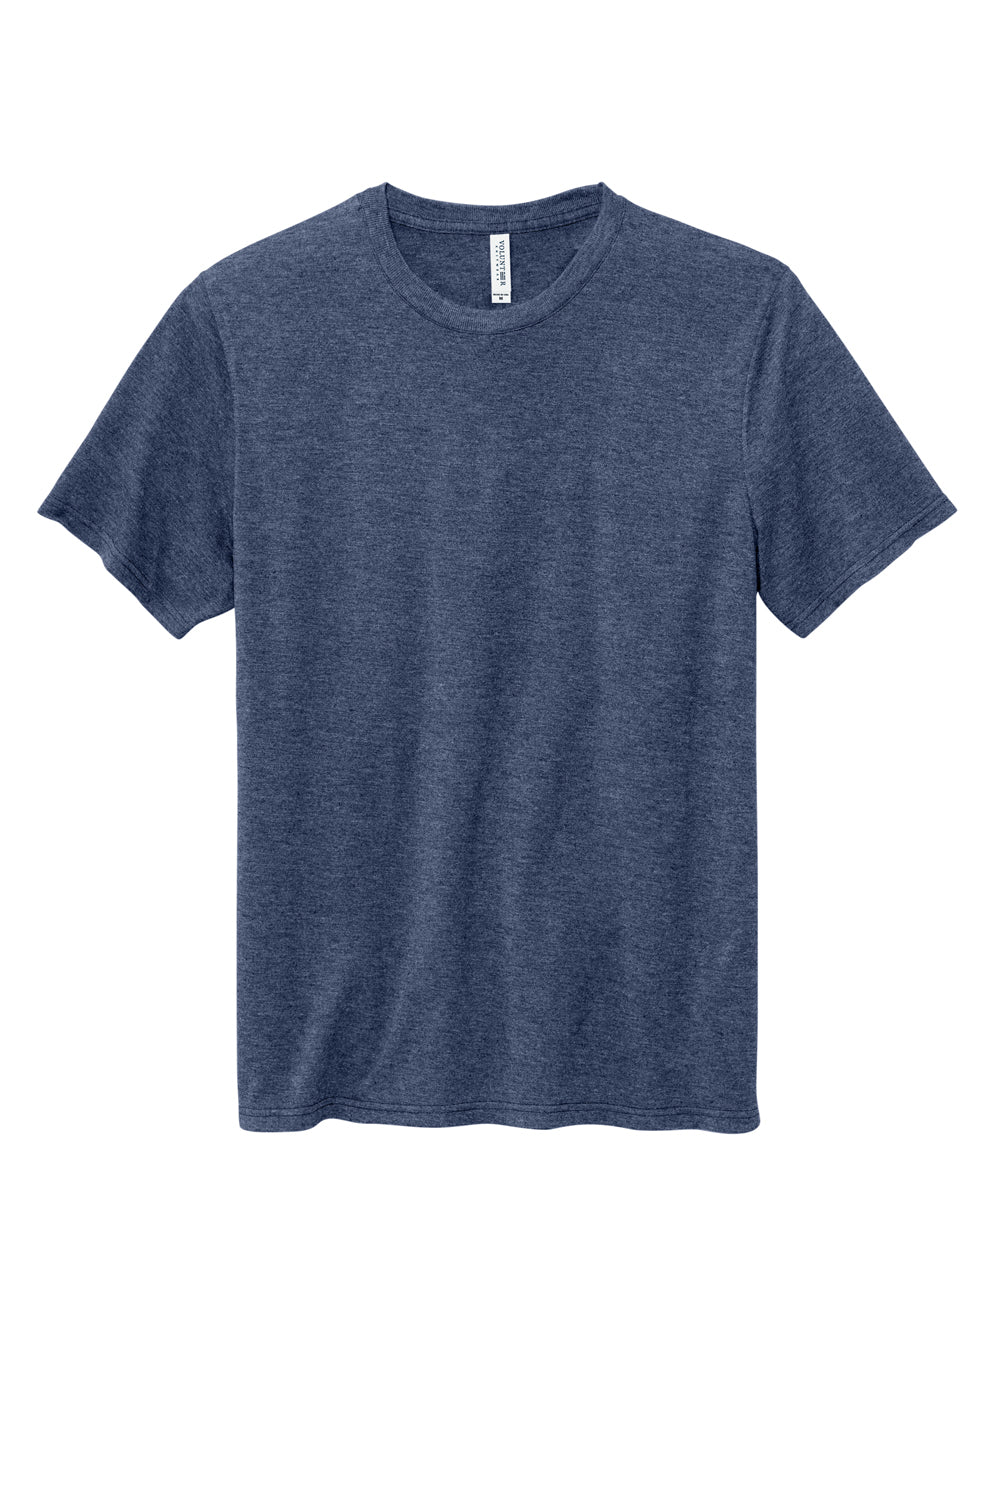 Volunteer Knitwear VL45 Daily Short Sleeve Crewneck T-Shirt Heather Navy Blue Flat Front